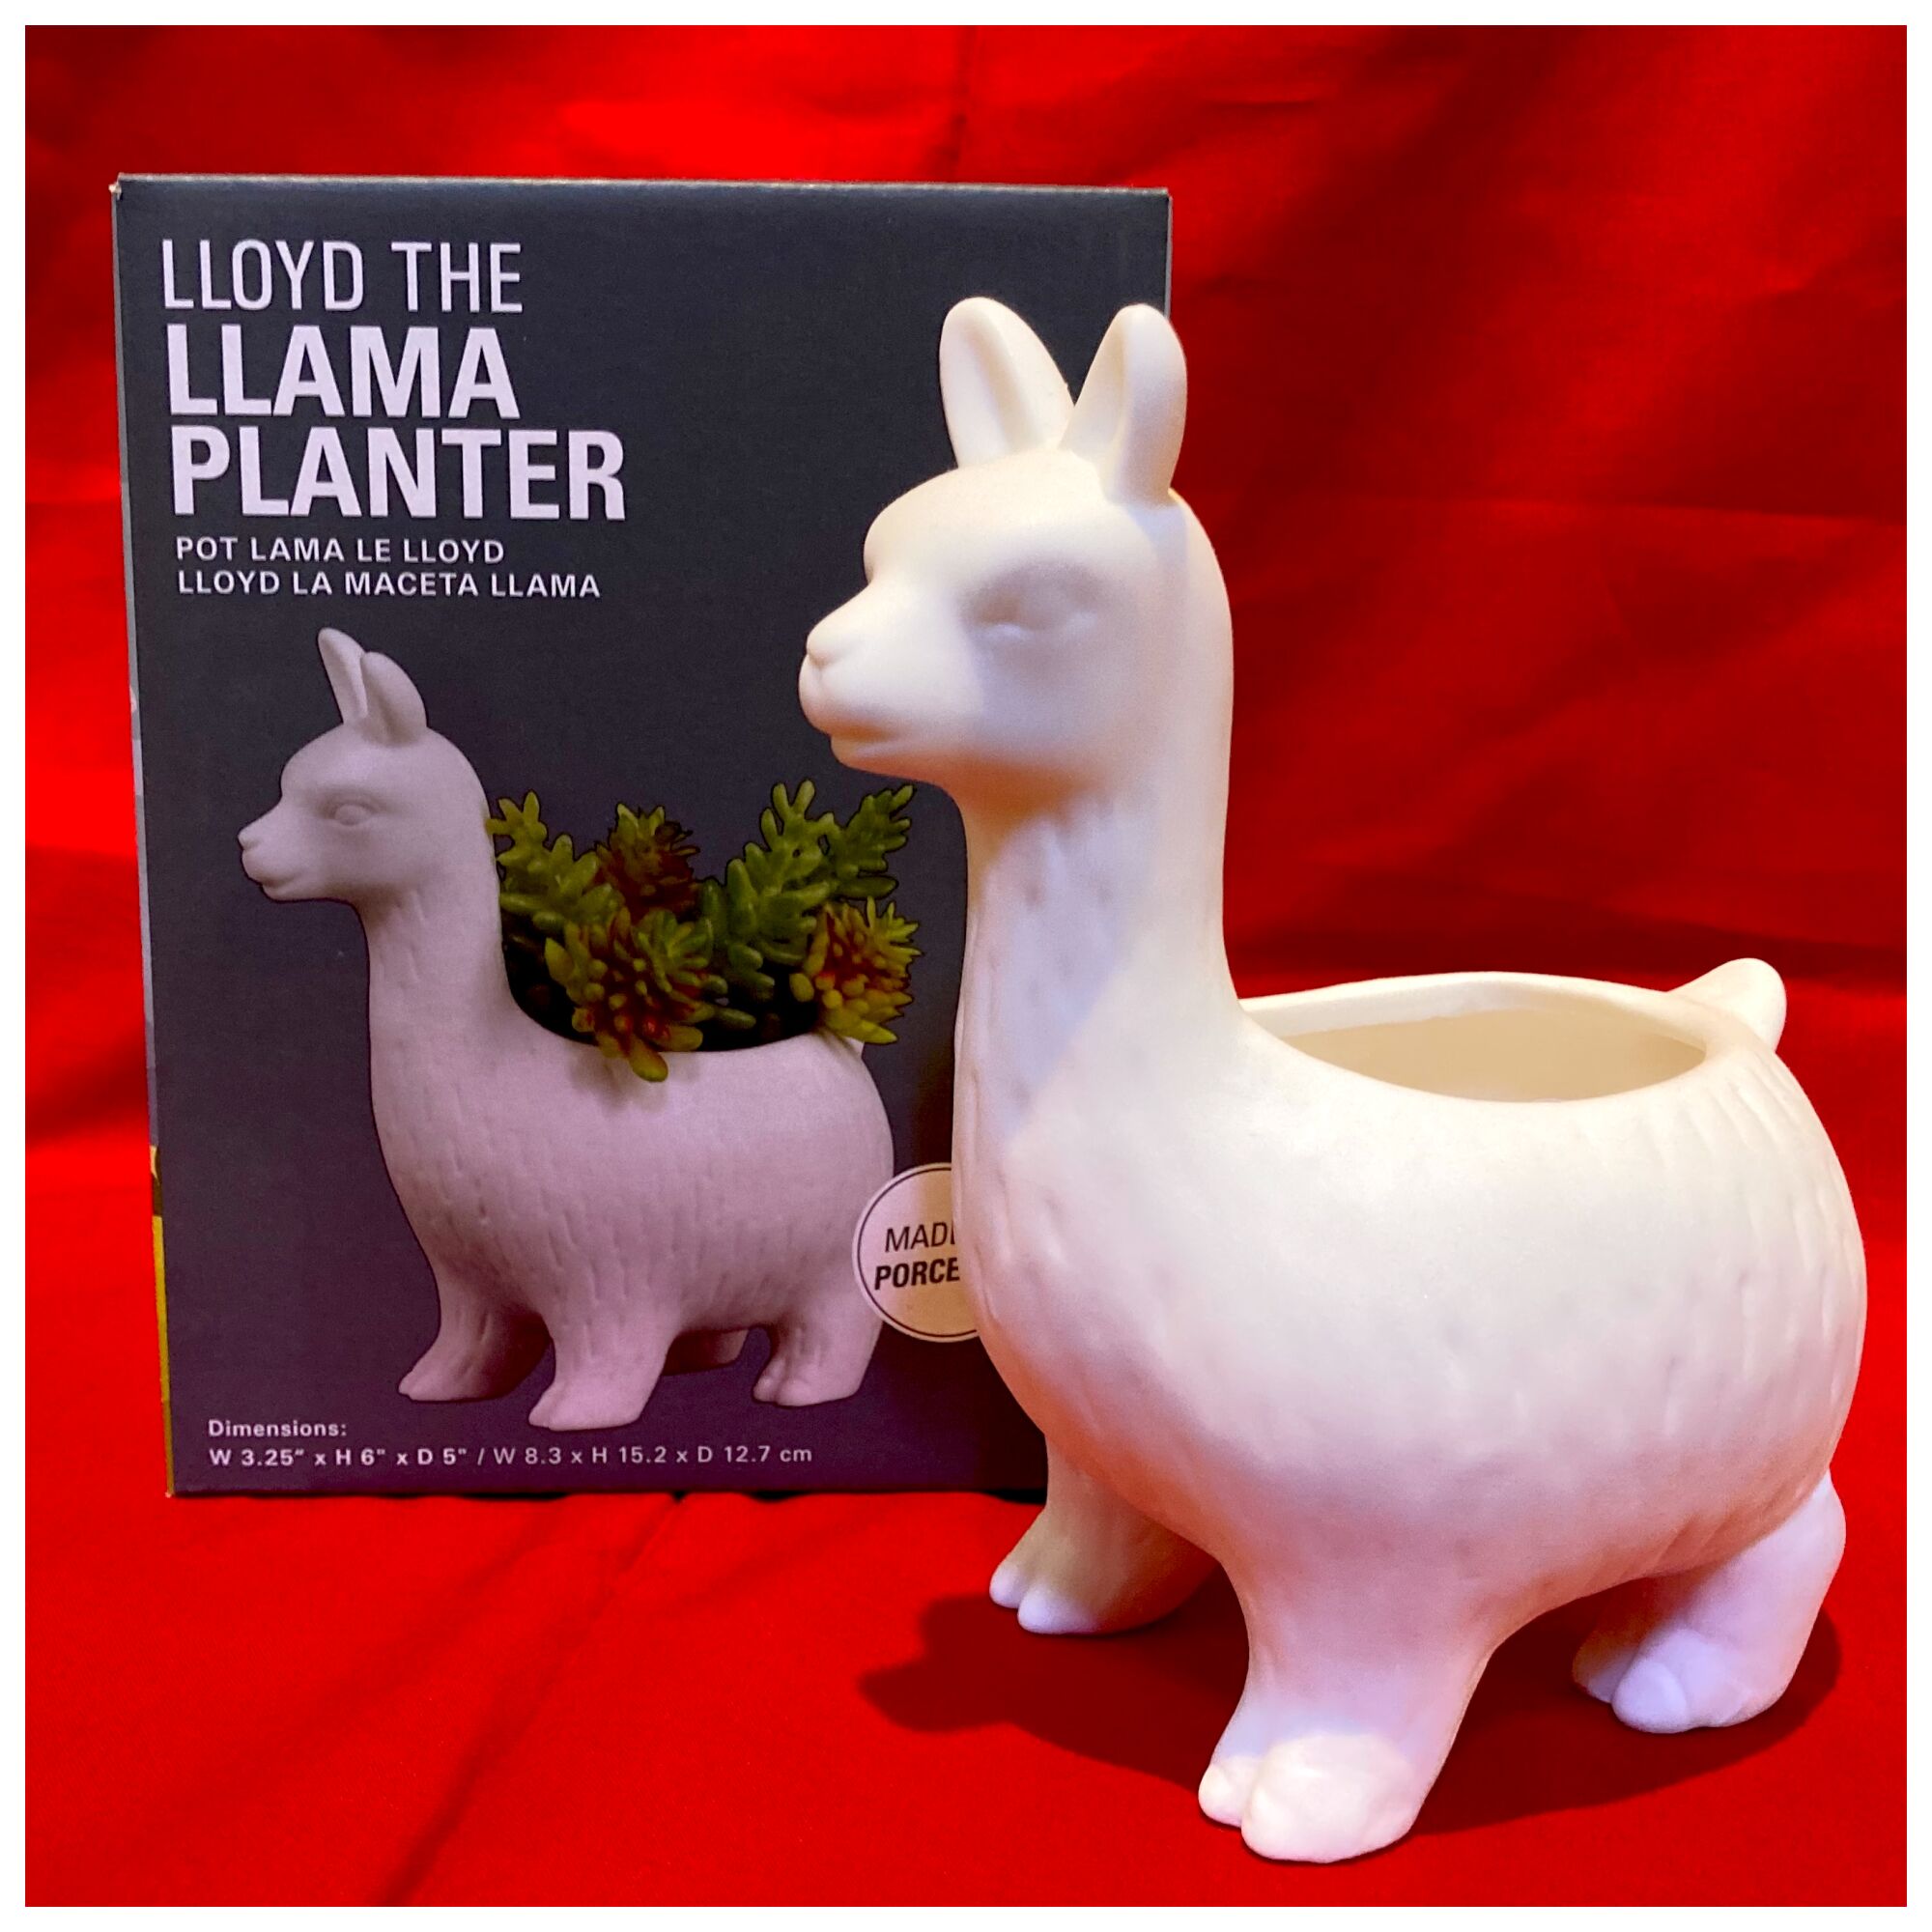 A Wacko Llama Planter